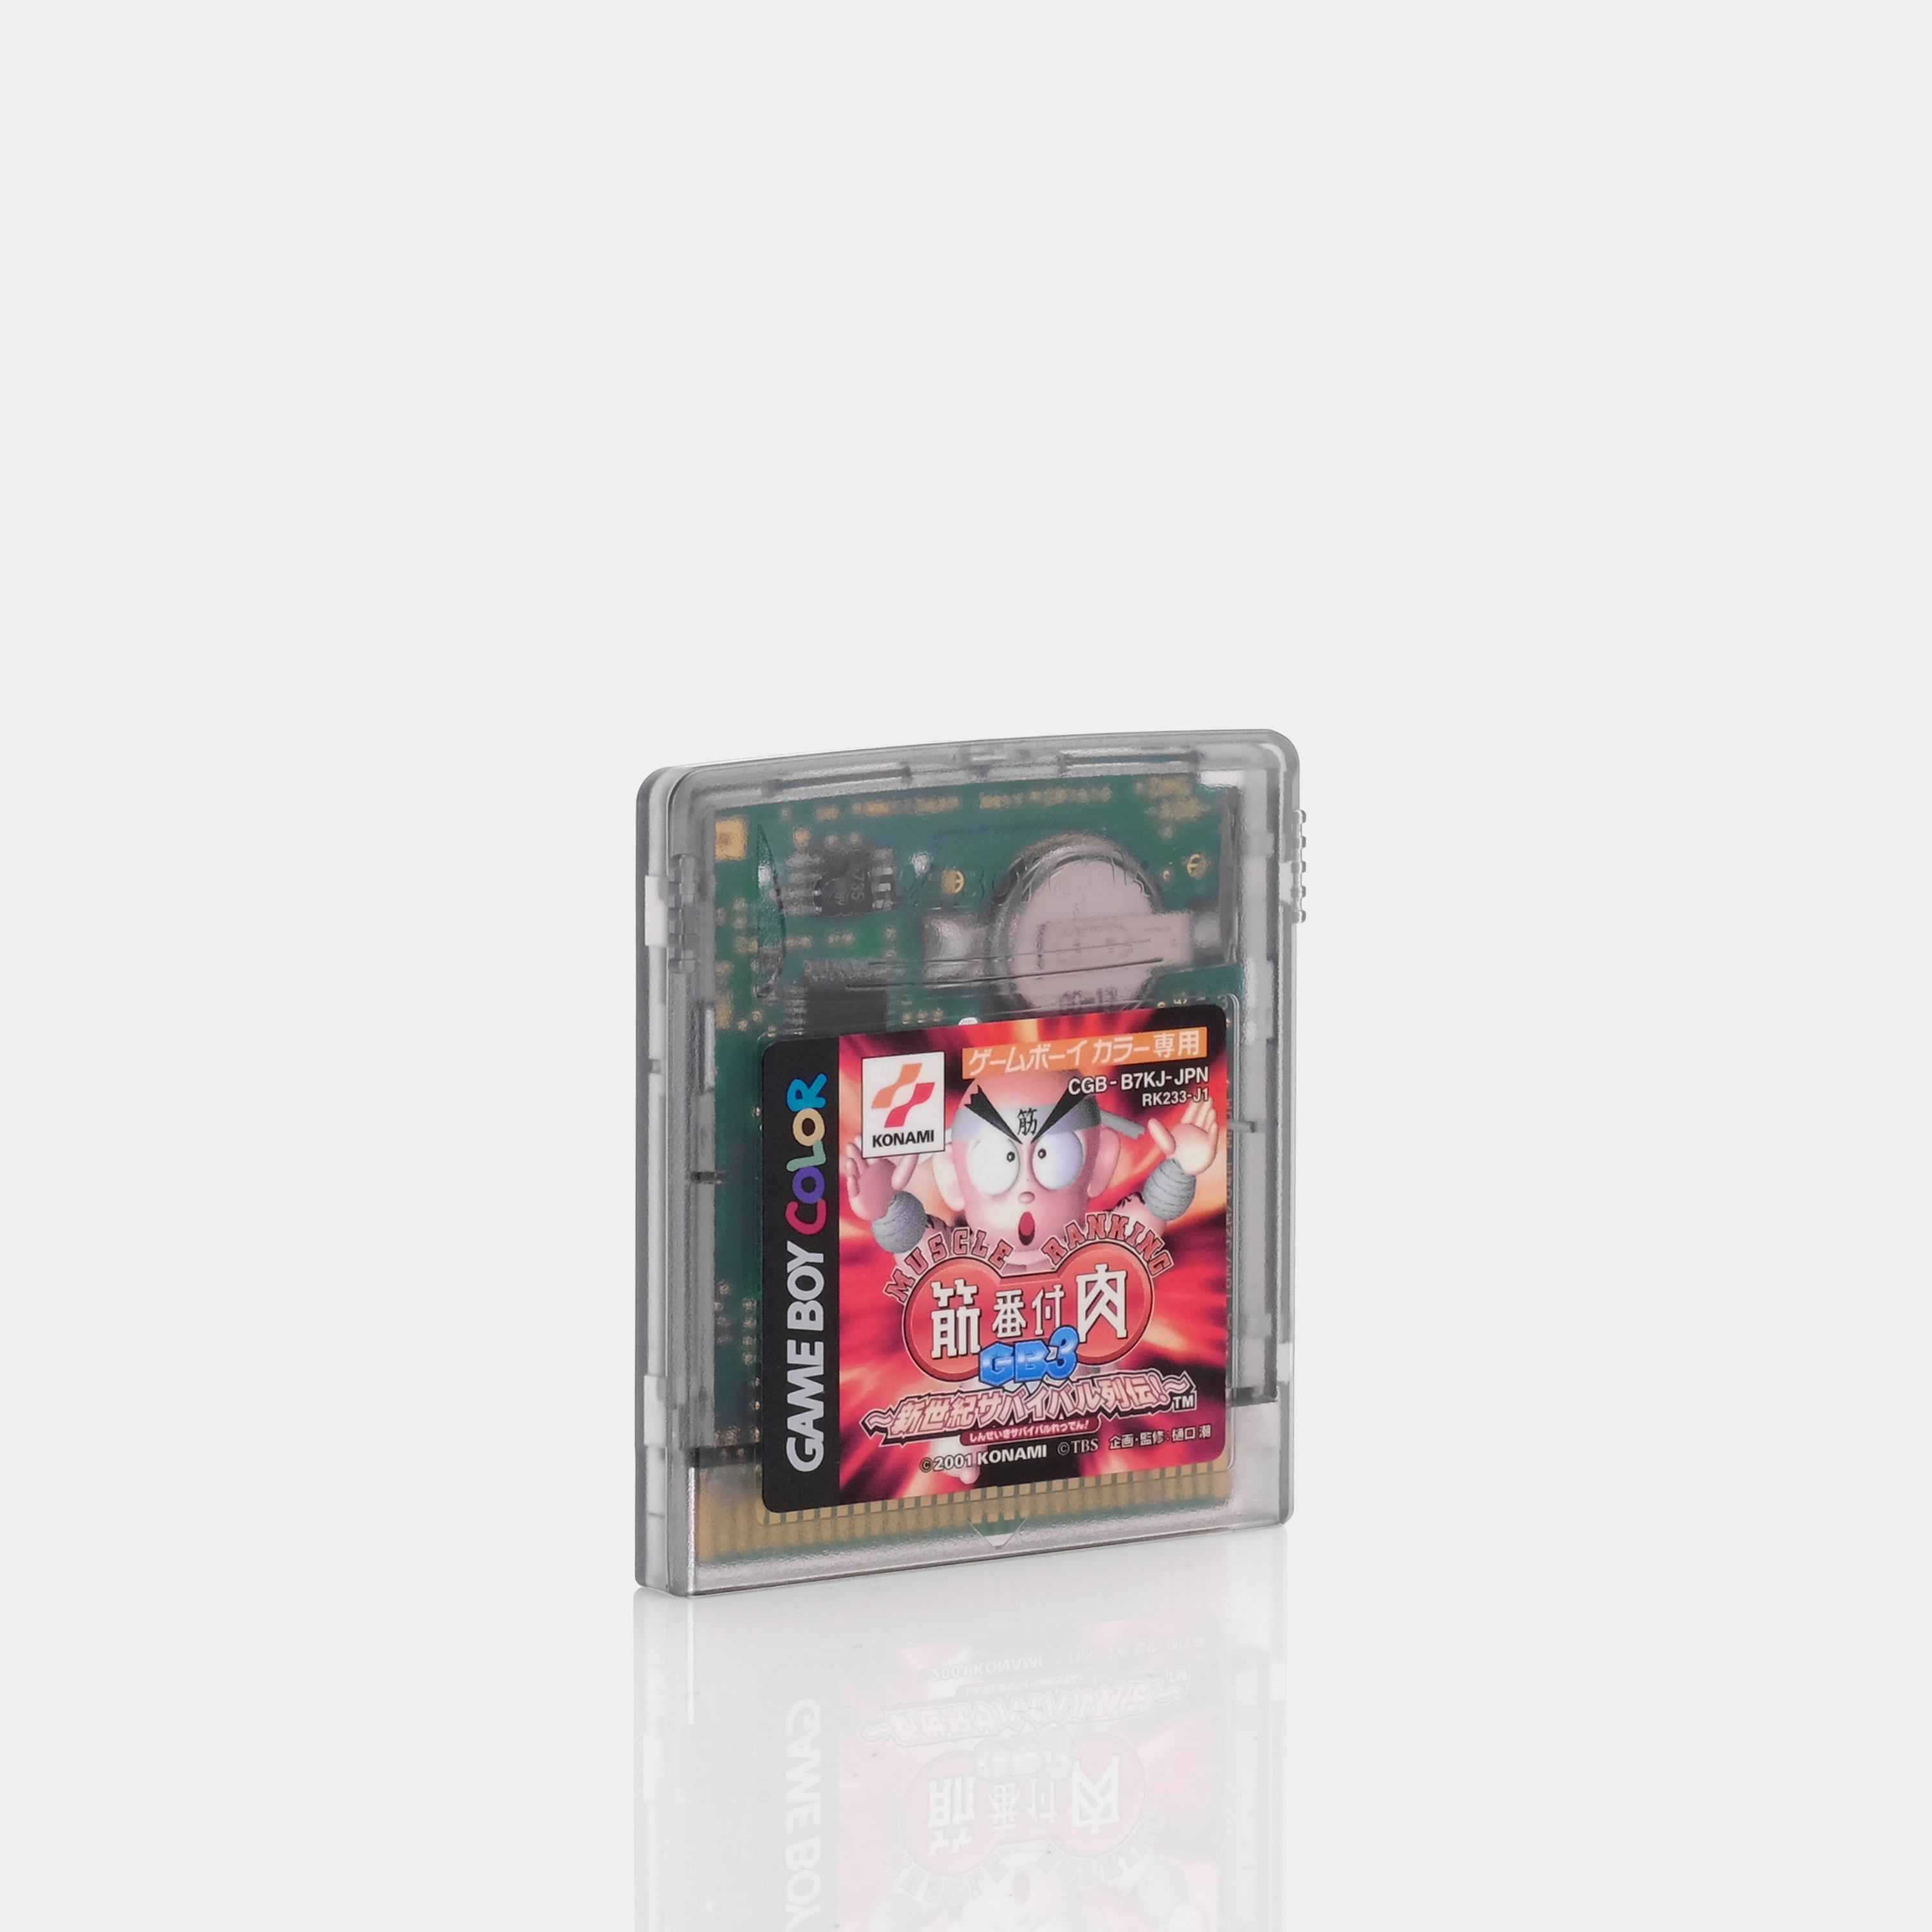 Kinniku Banzuke GB 3 - Shinseiki Survival Retsuden! 筋肉番付GB 3 ～新世紀サバイバル列伝! (Japanese Version) Game Boy Color Game